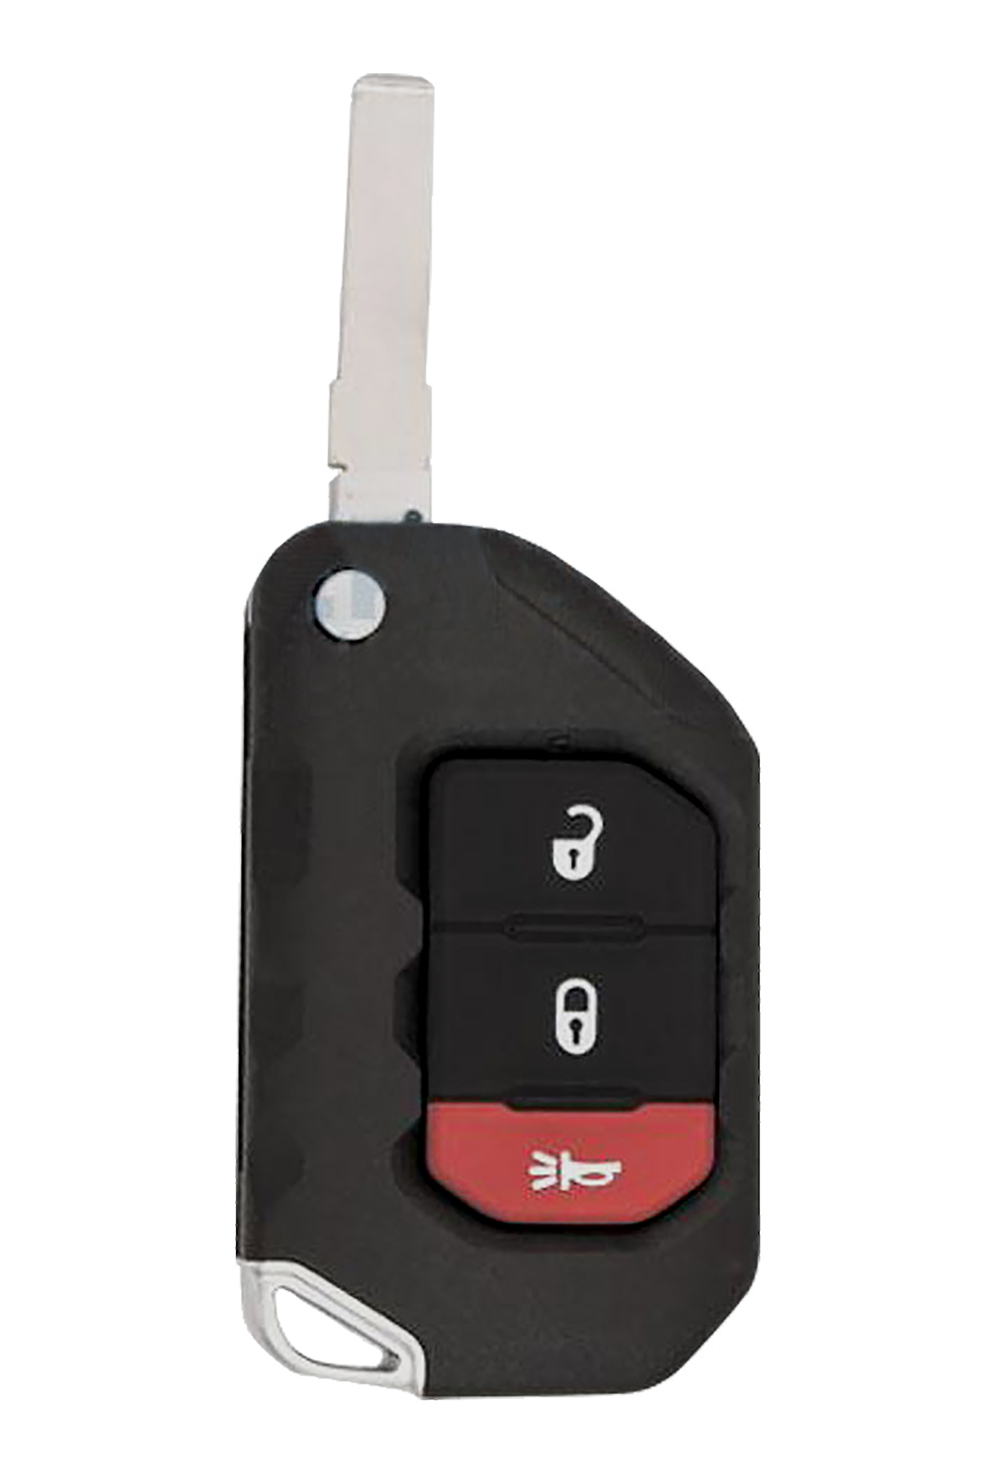 ILCO FLIP-JEEP-3B1 - Jeep 3 Button Flip Key - FCC: OHT1130261 - IAX00015880 / 036448259267 - Aftermarket for 68416782